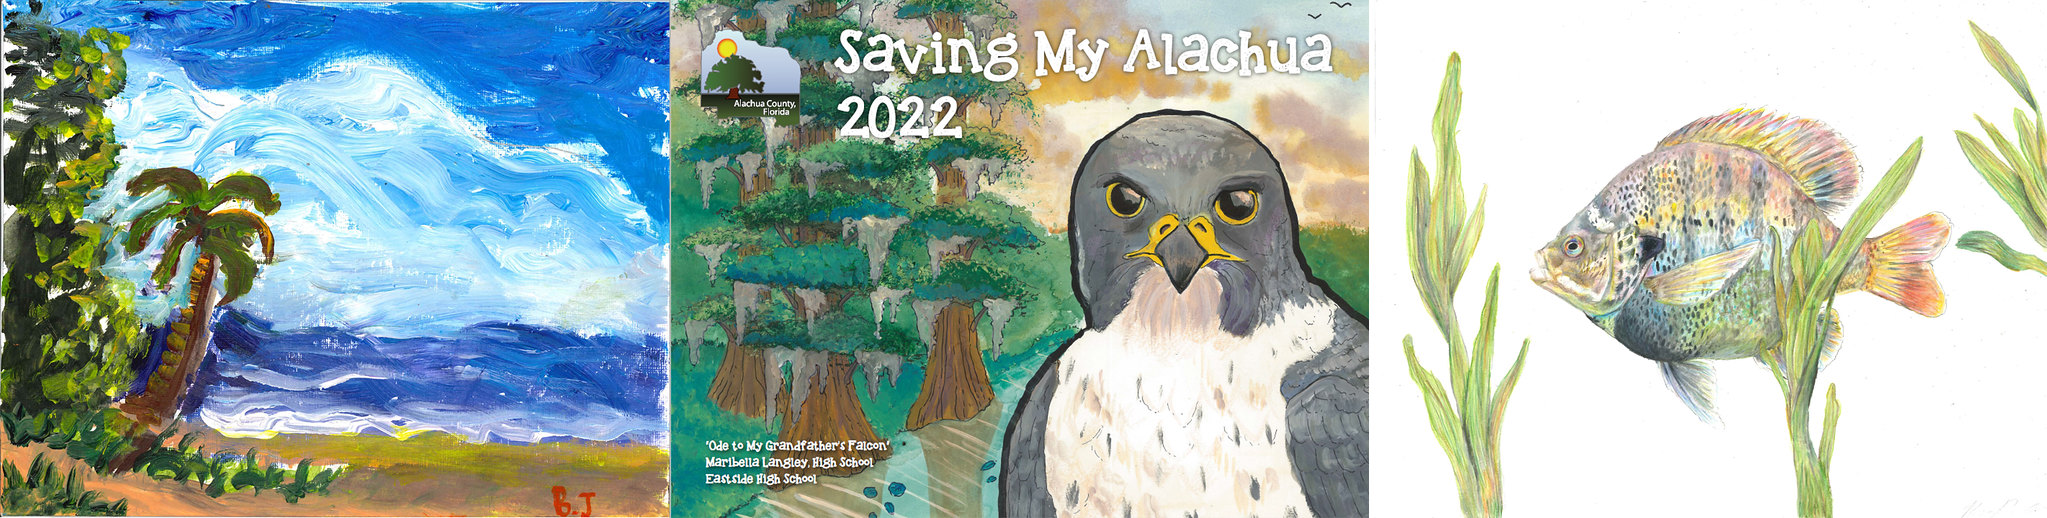 2022 Saving My Alachua Calendar